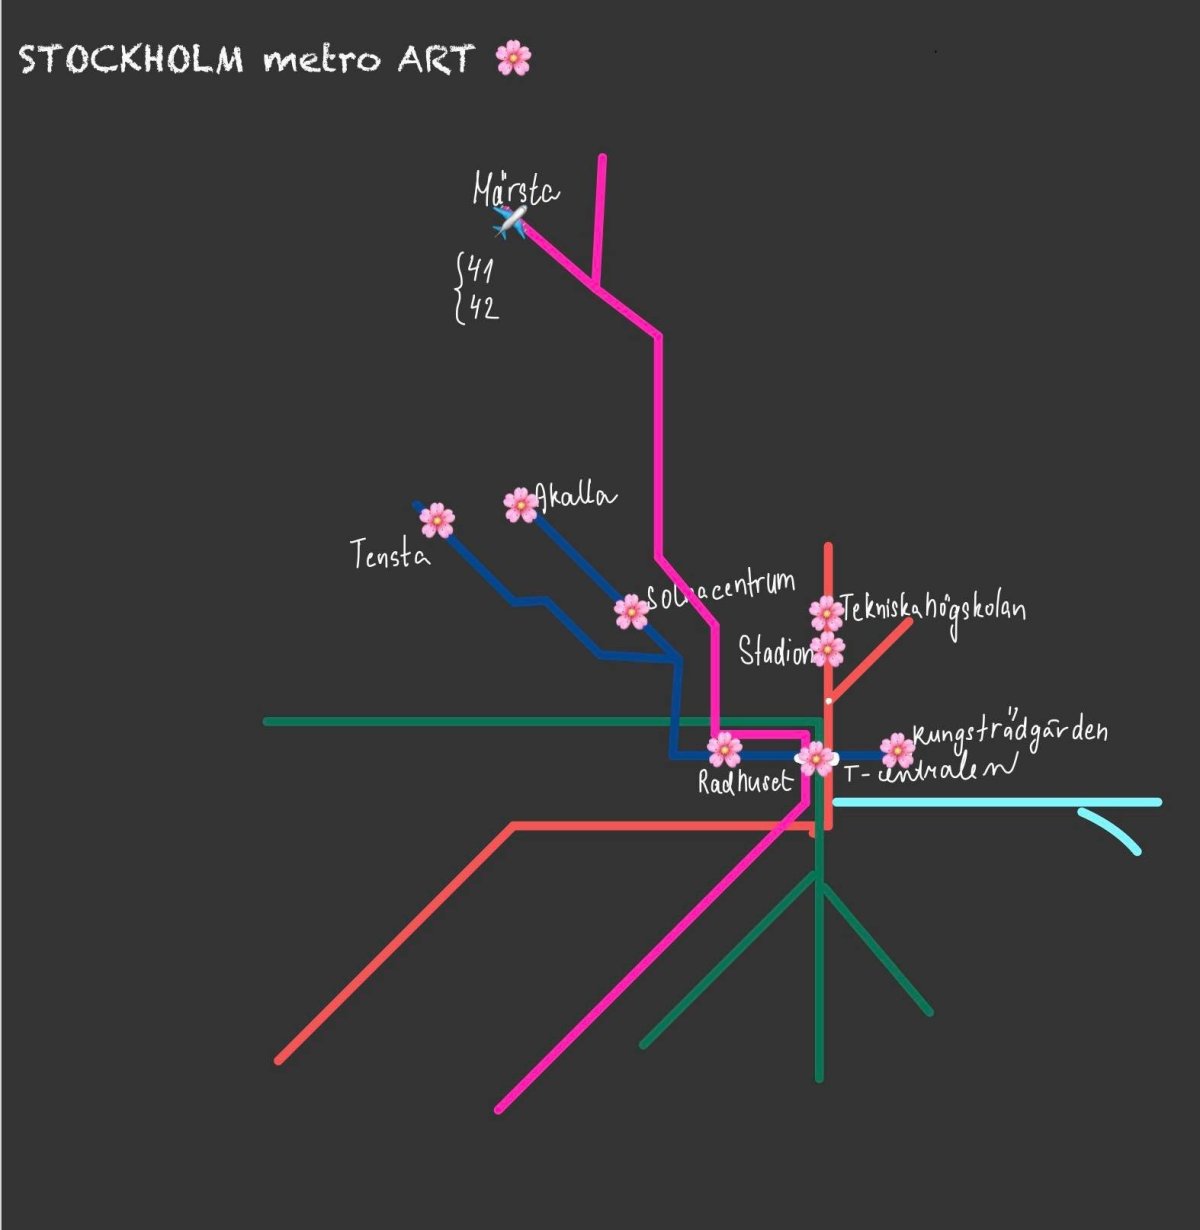 Stockholm metro art mapa